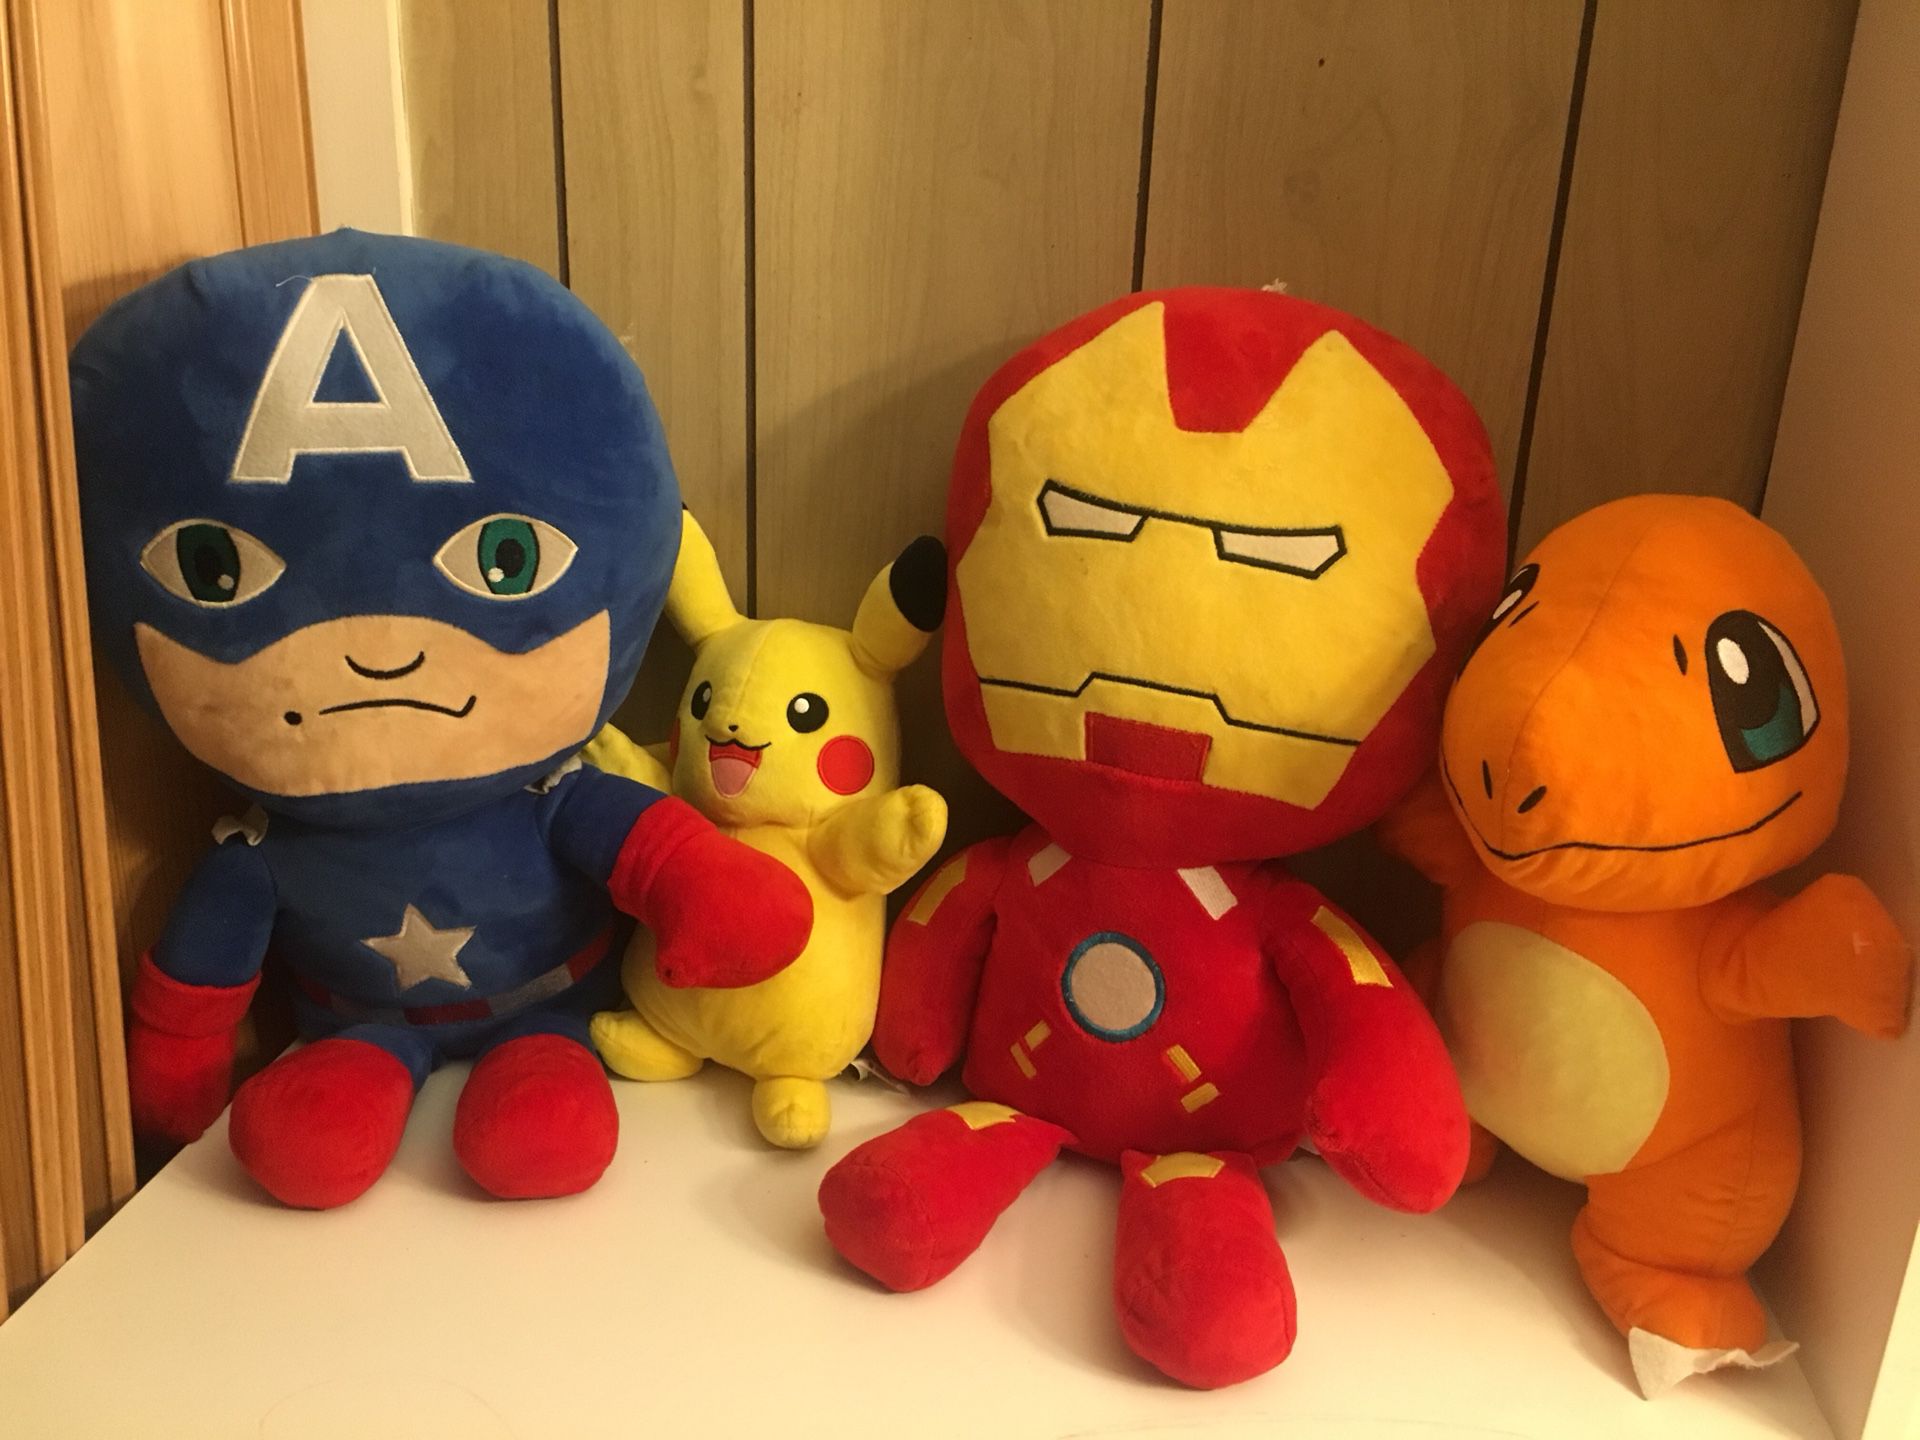 Captain America, Iron Man, Pokémon characters